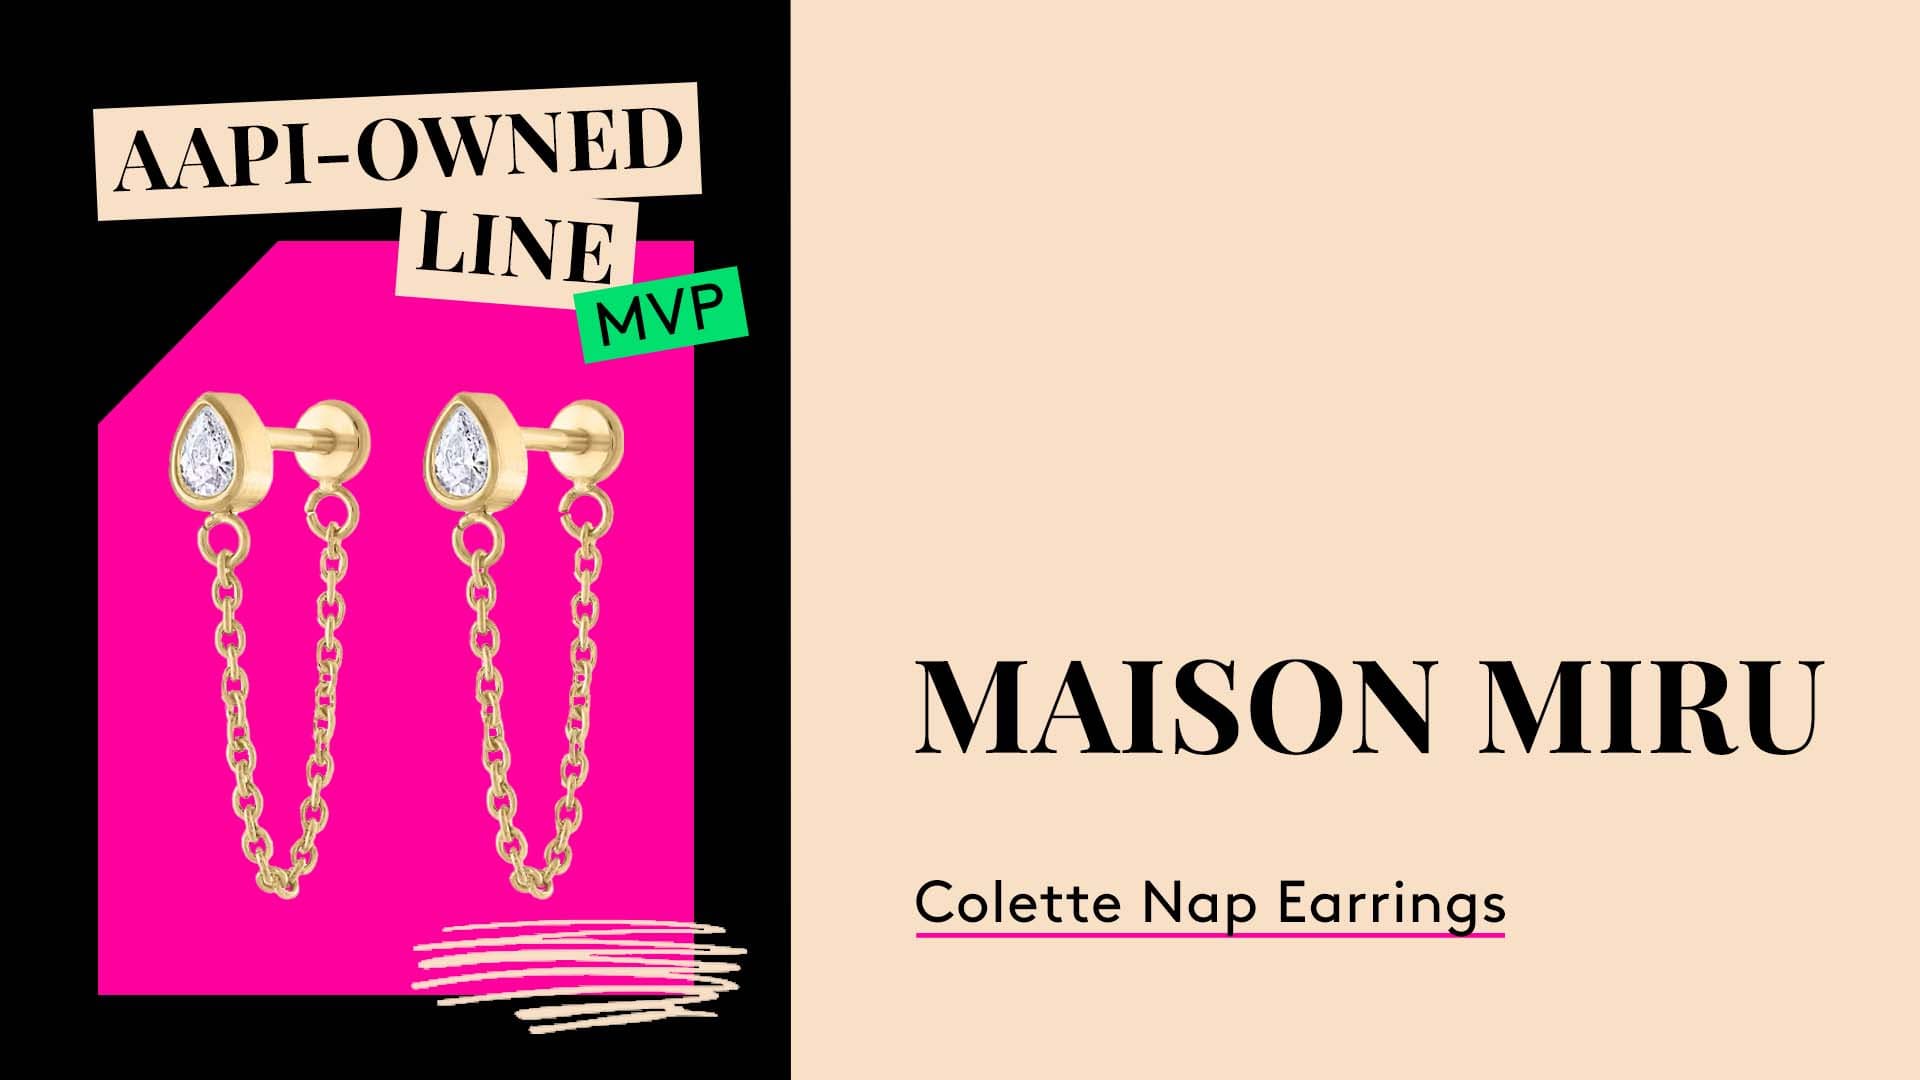 AAPI-Owned Line MVP. Maison Miru Colette Nap Earrings.